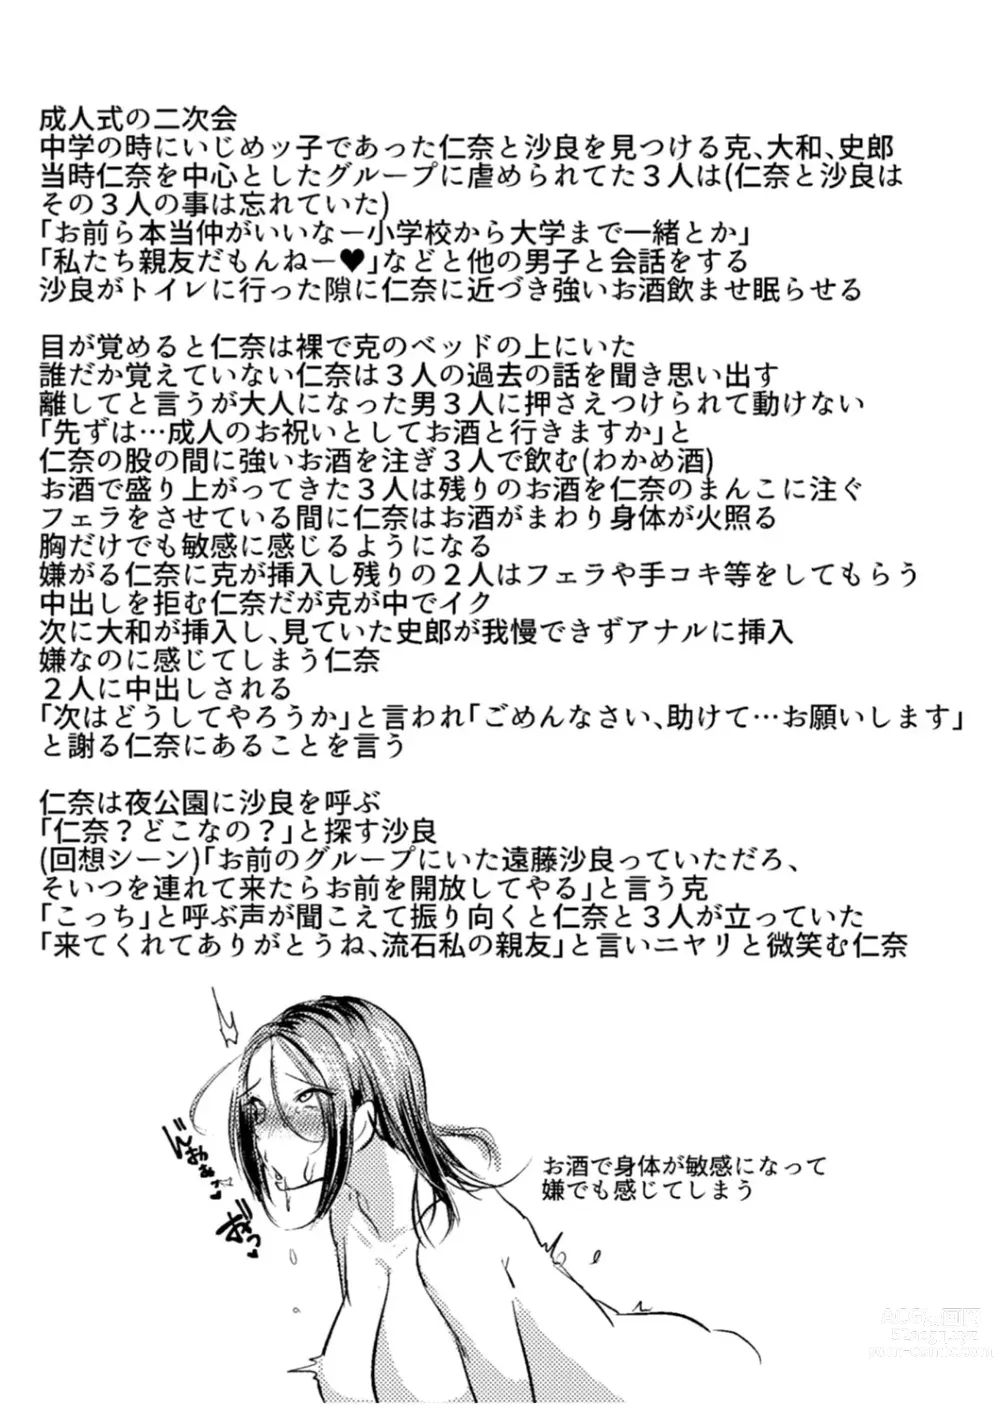 Page 213 of manga Kowashite Asobo + DLsite Gentei Chara Settei & Plot